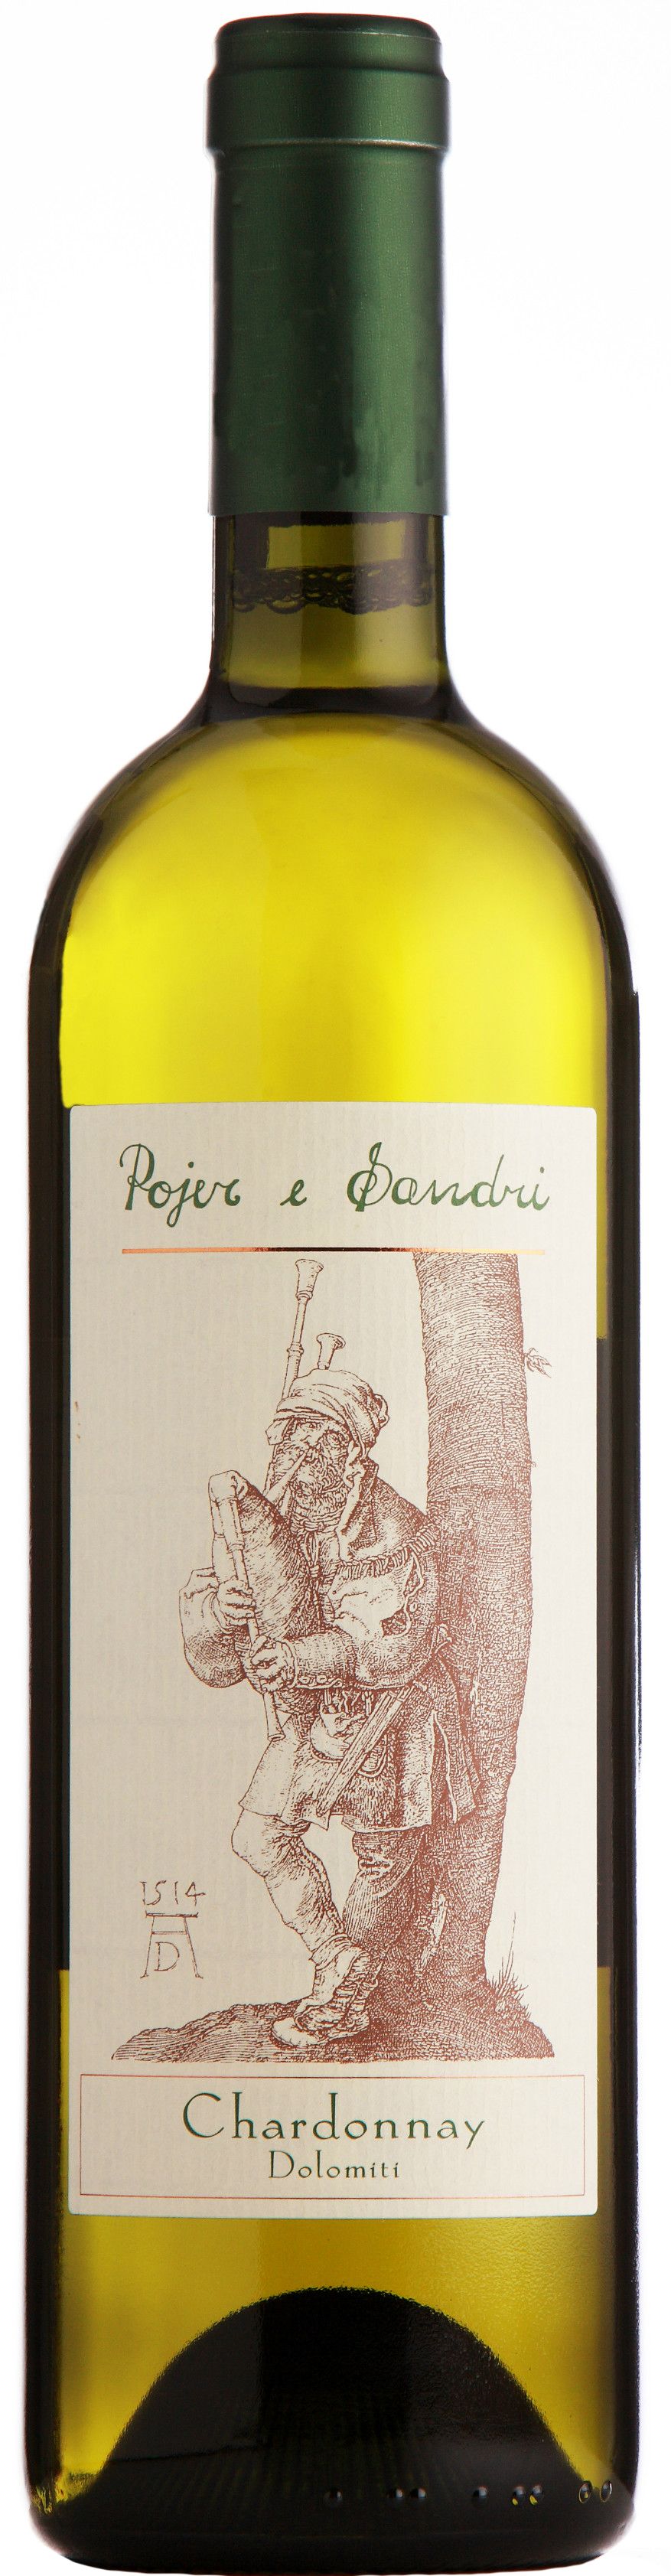 Pojer & Sandri, Chardonnay, 2011